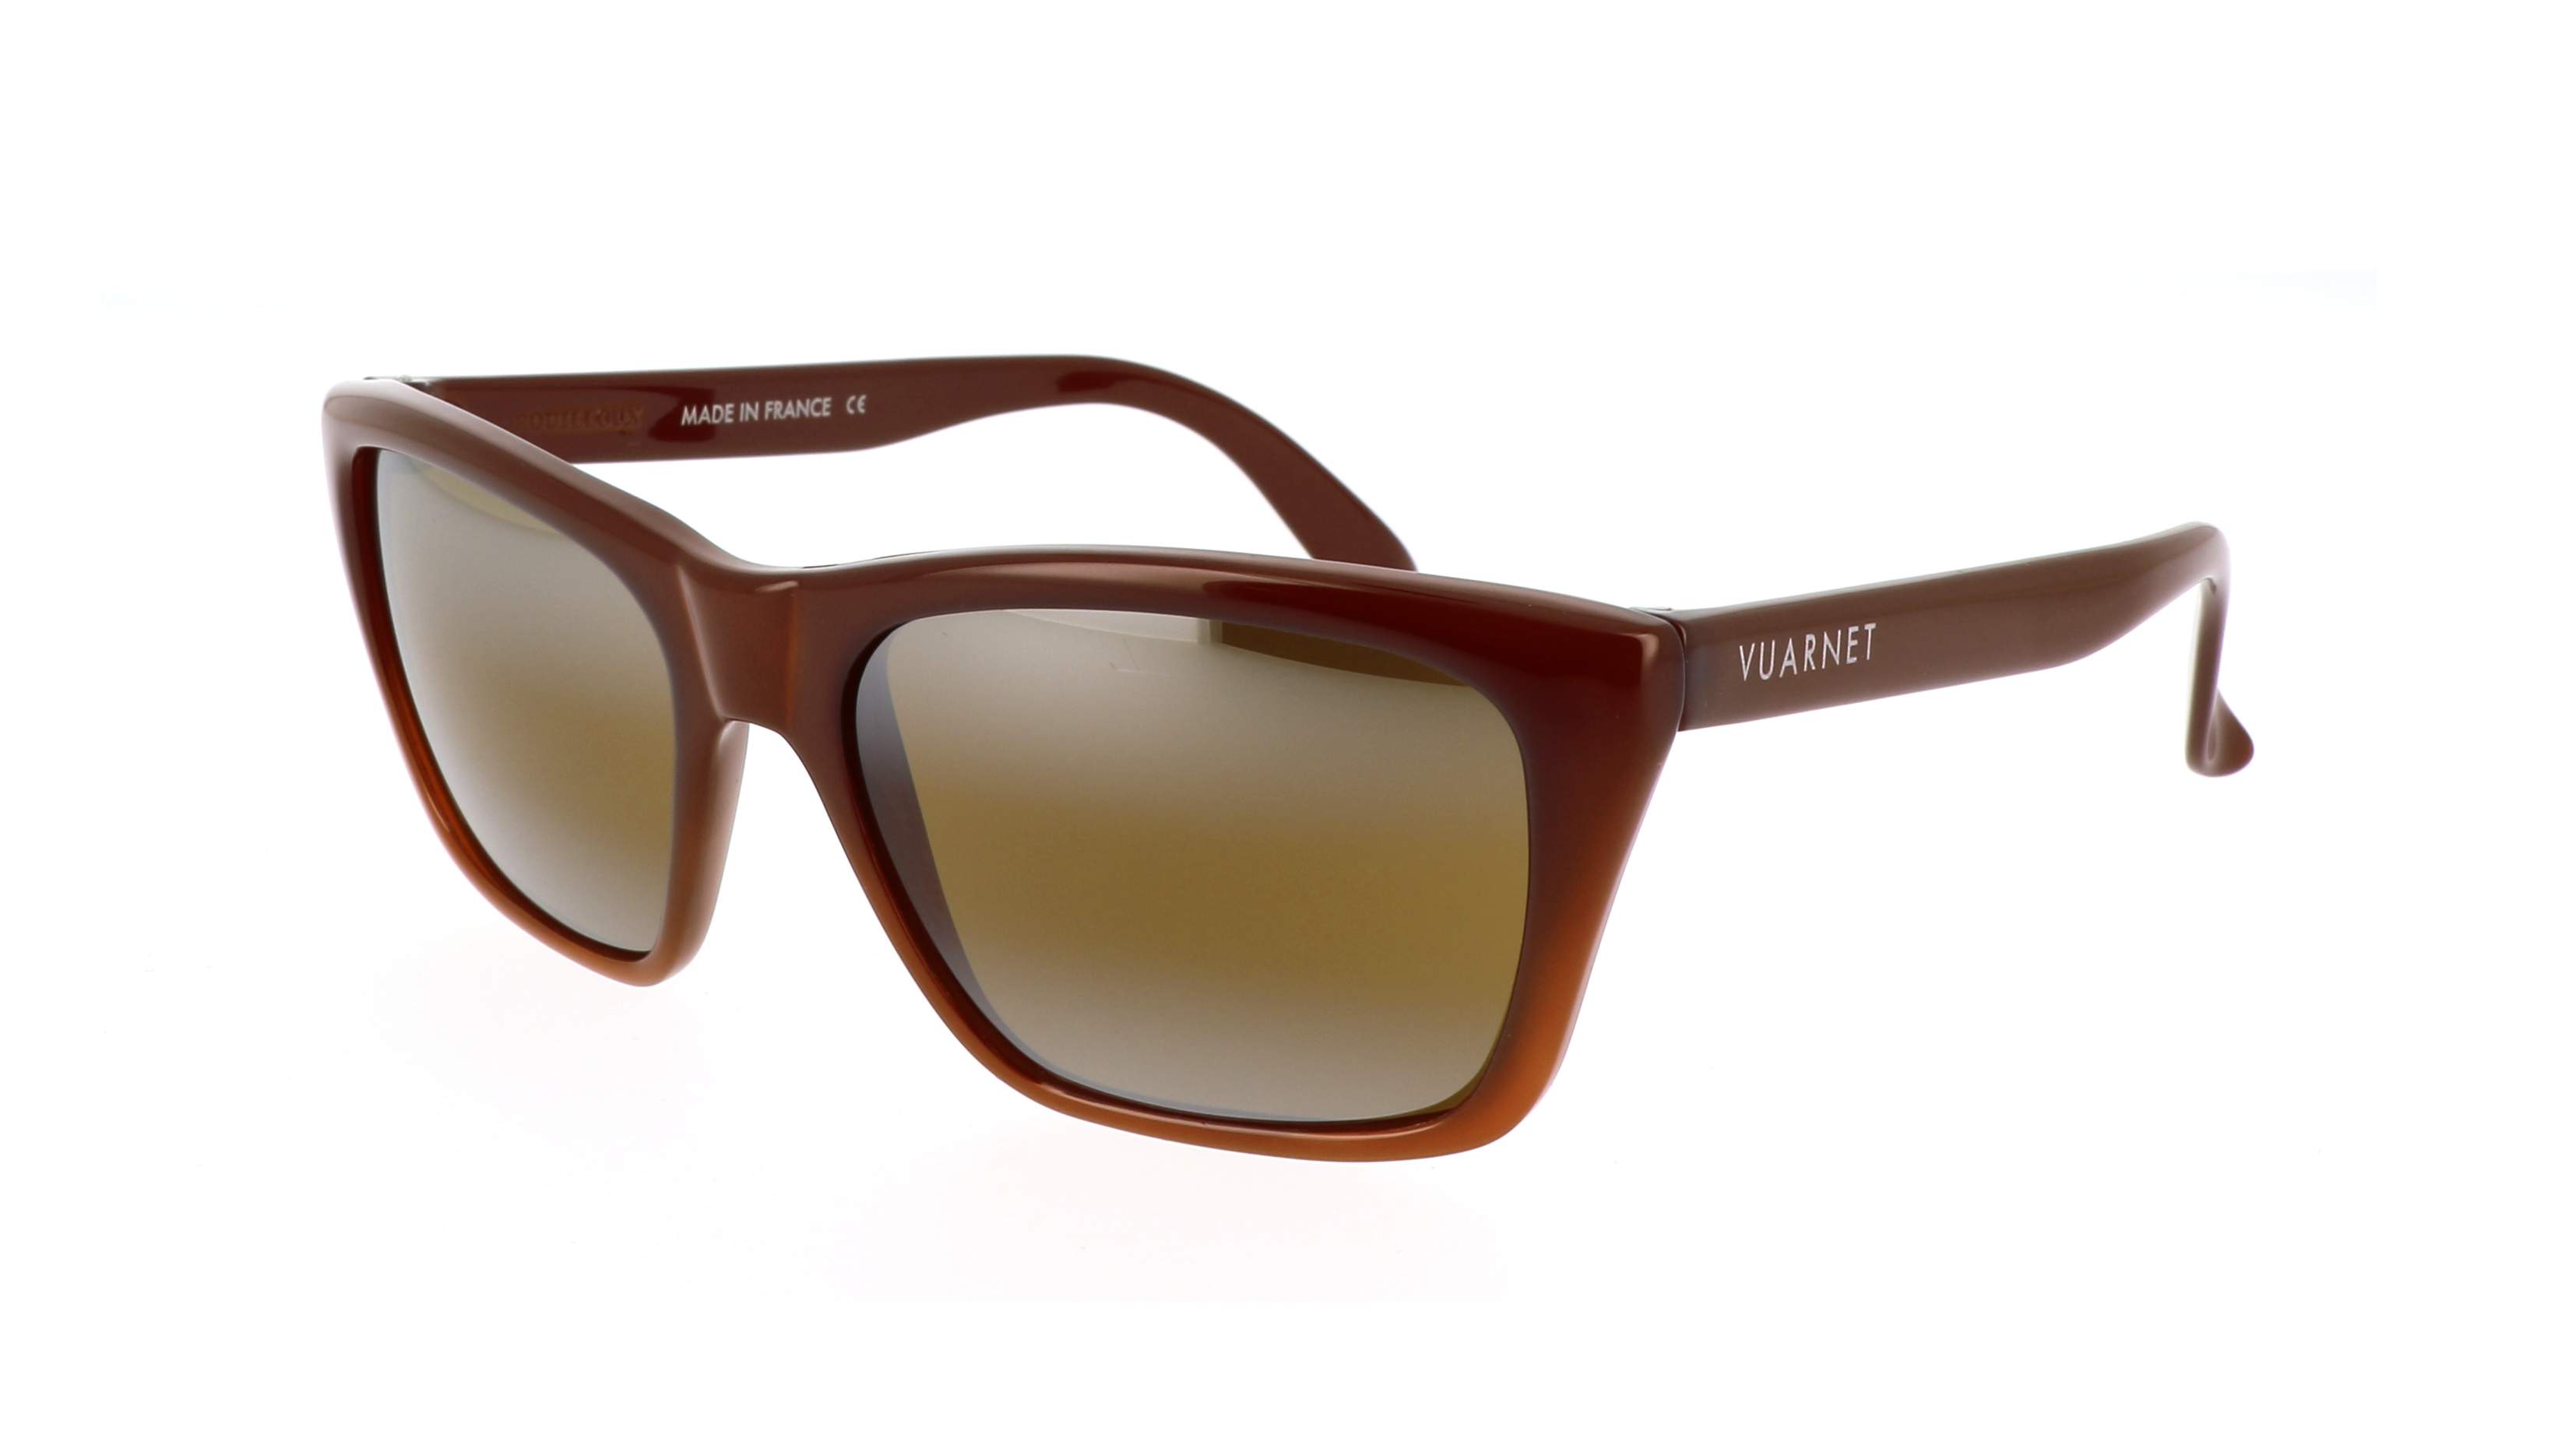 Sunglasses Vuarnet Legend 06 originals VL0006 0003 58-16 Brown in stock ...